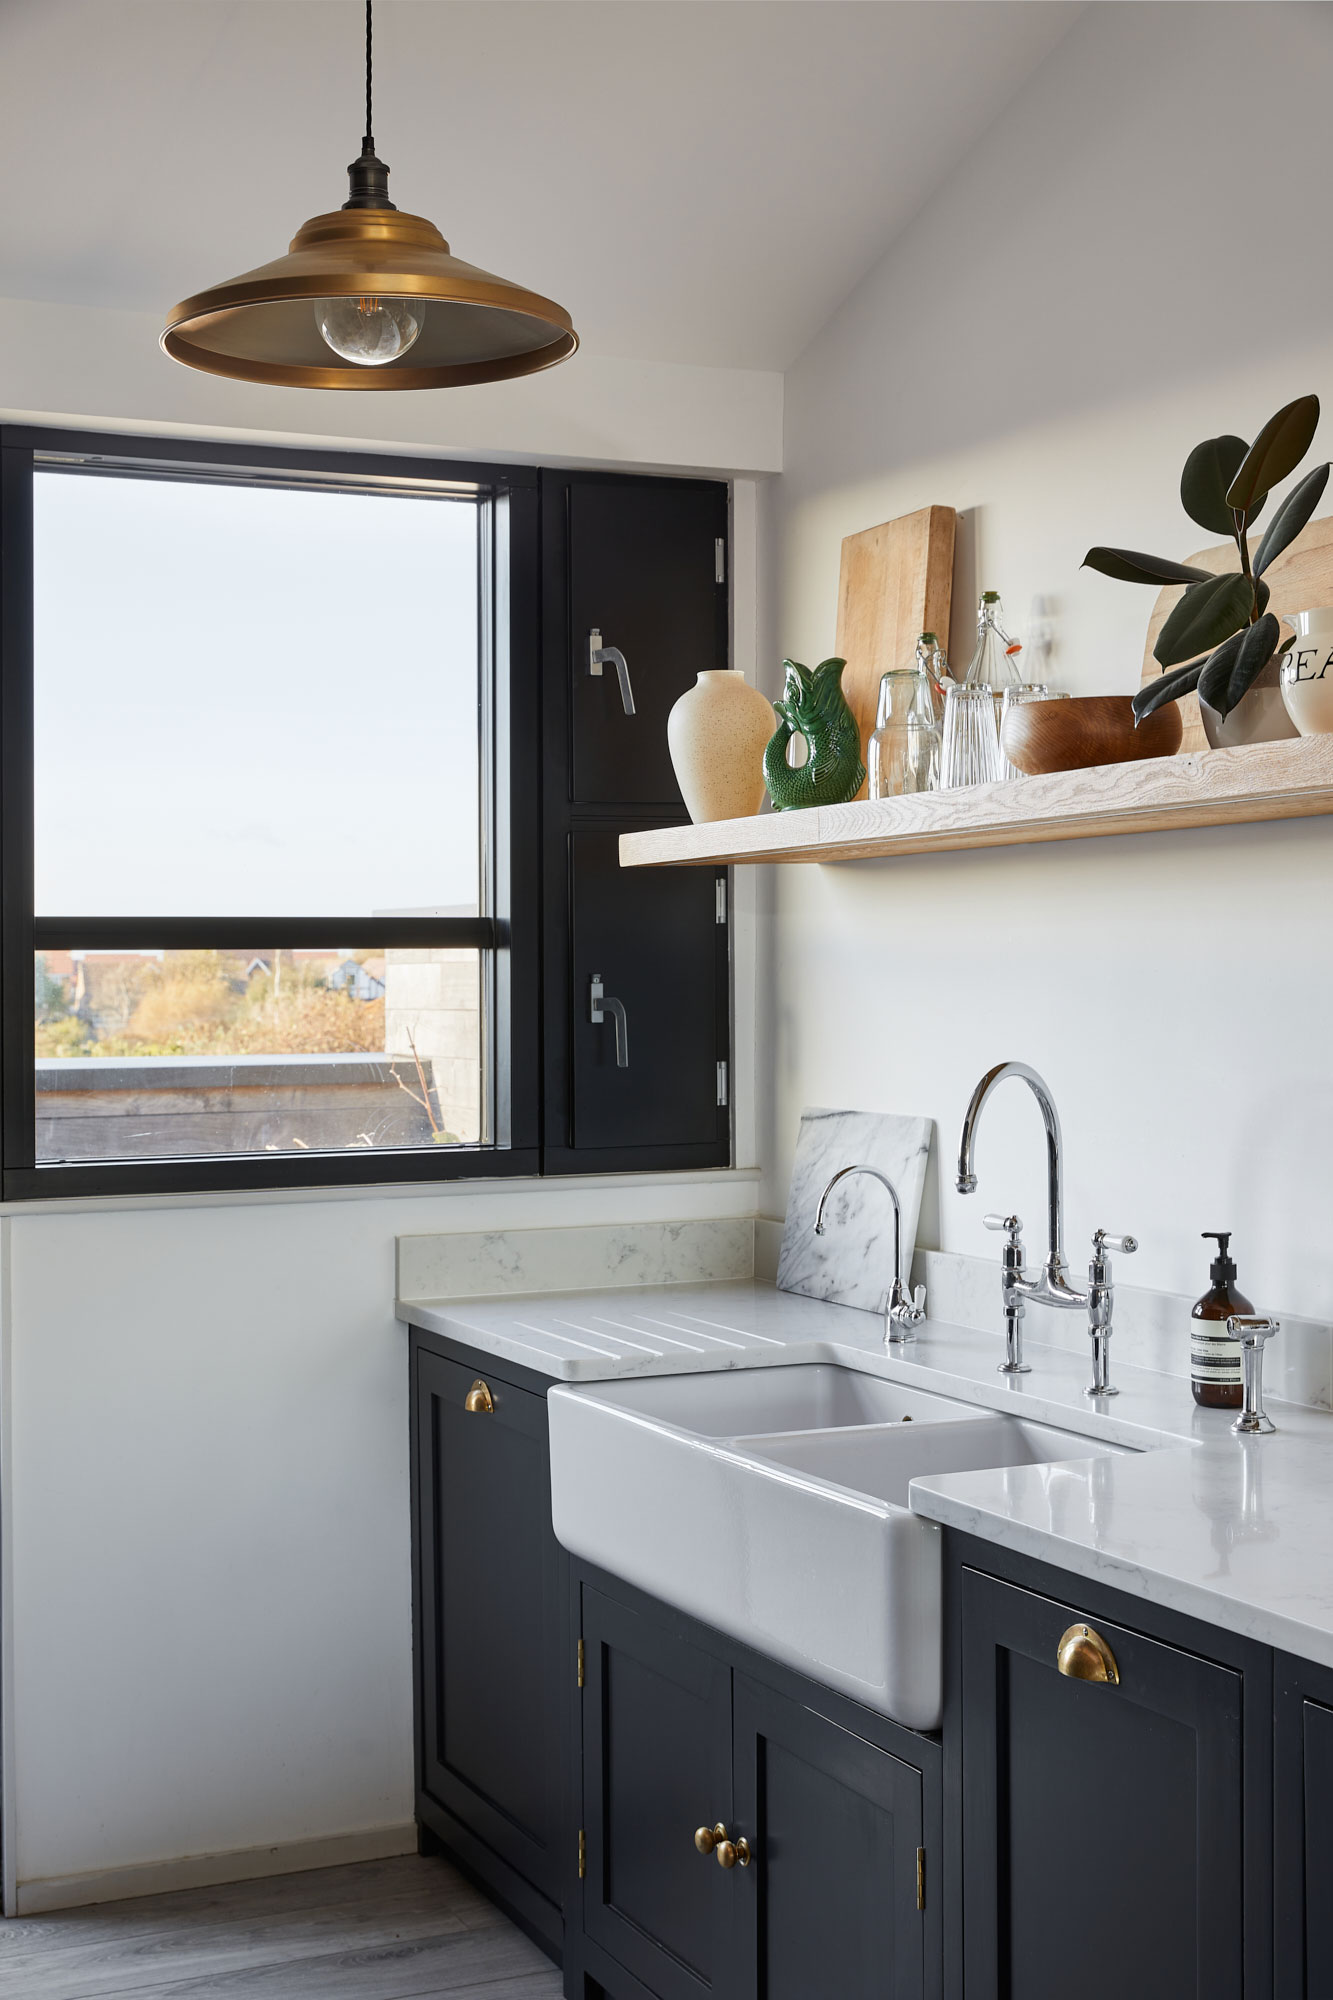 Double belfast utility sink with deep blue bespoke kitchen cabinets